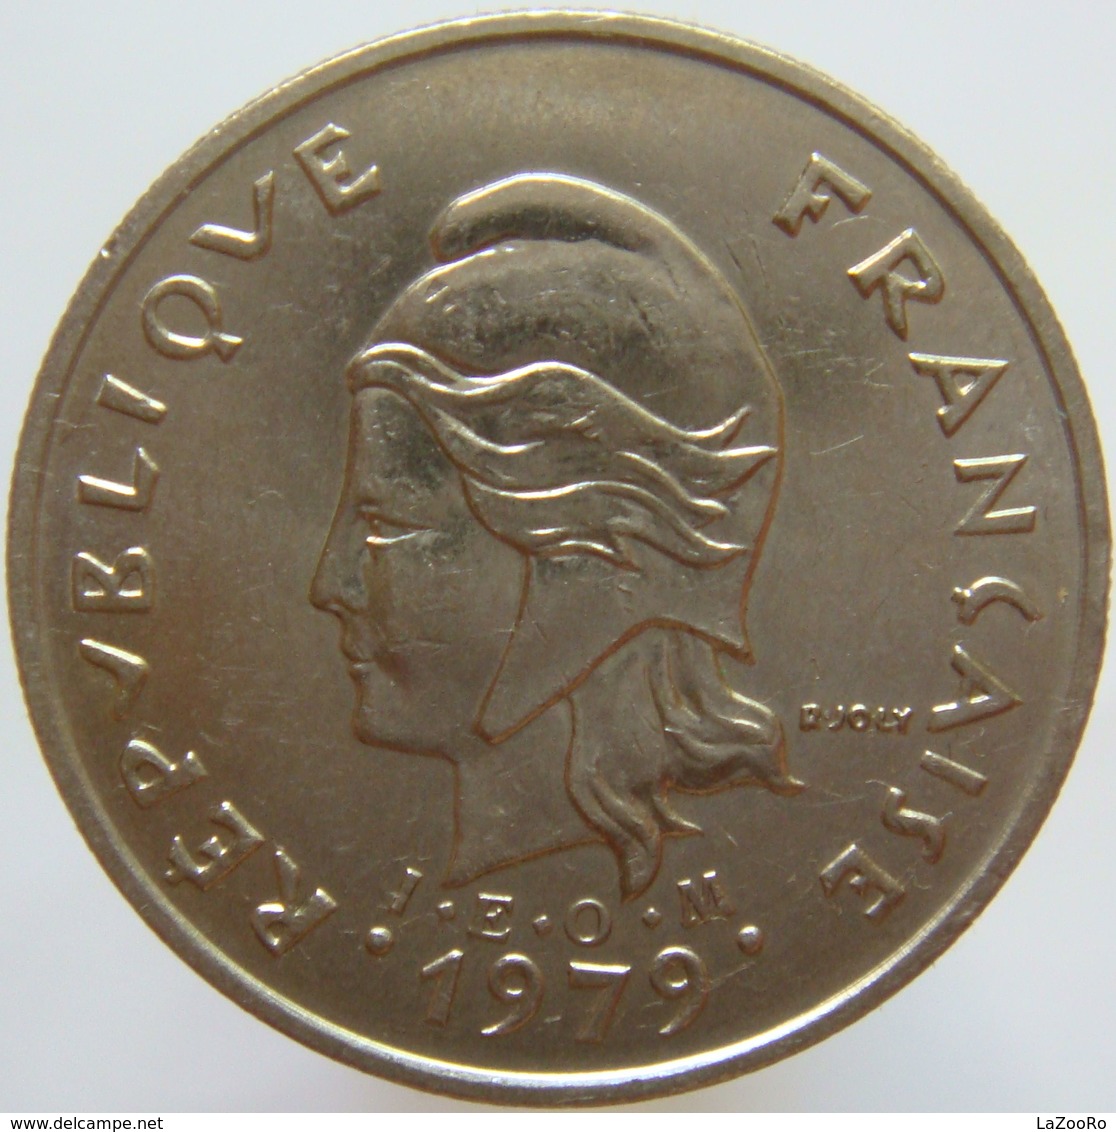 LaZooRo: French Polynesia 10 Francs 1979 XF / UNC - Französisch-Polynesien